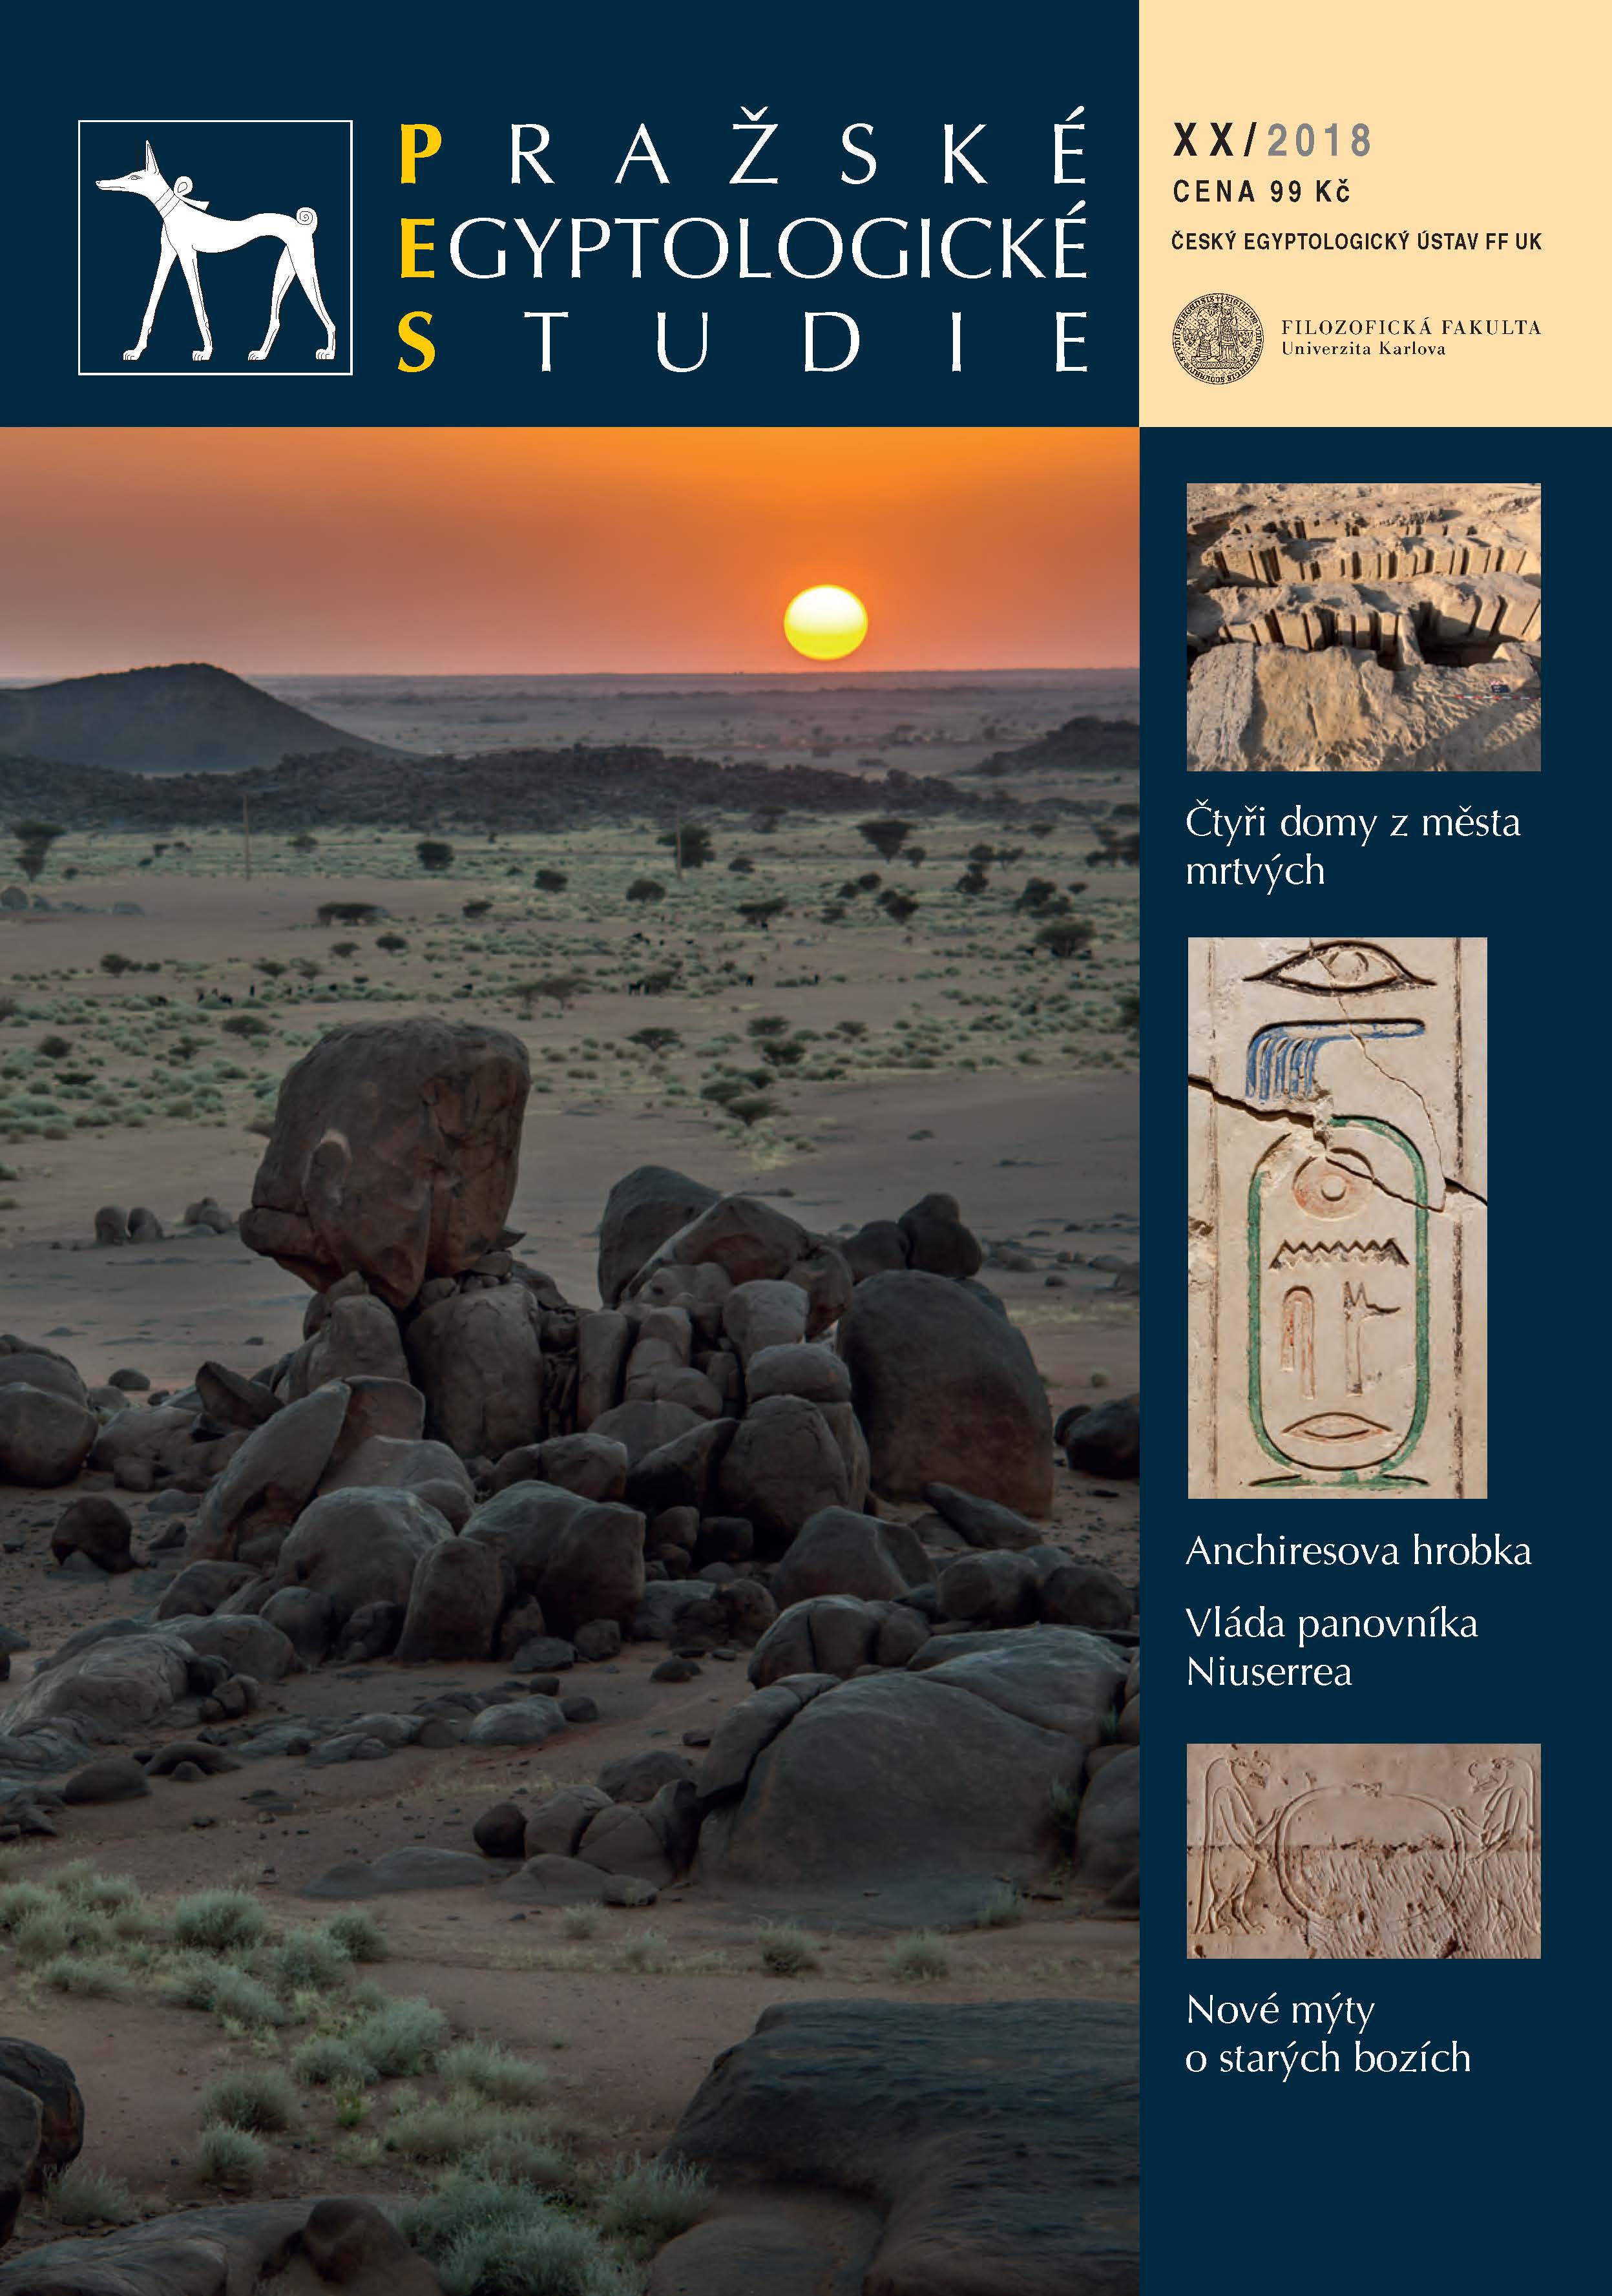 Prague Egyptological Studies Cover Image